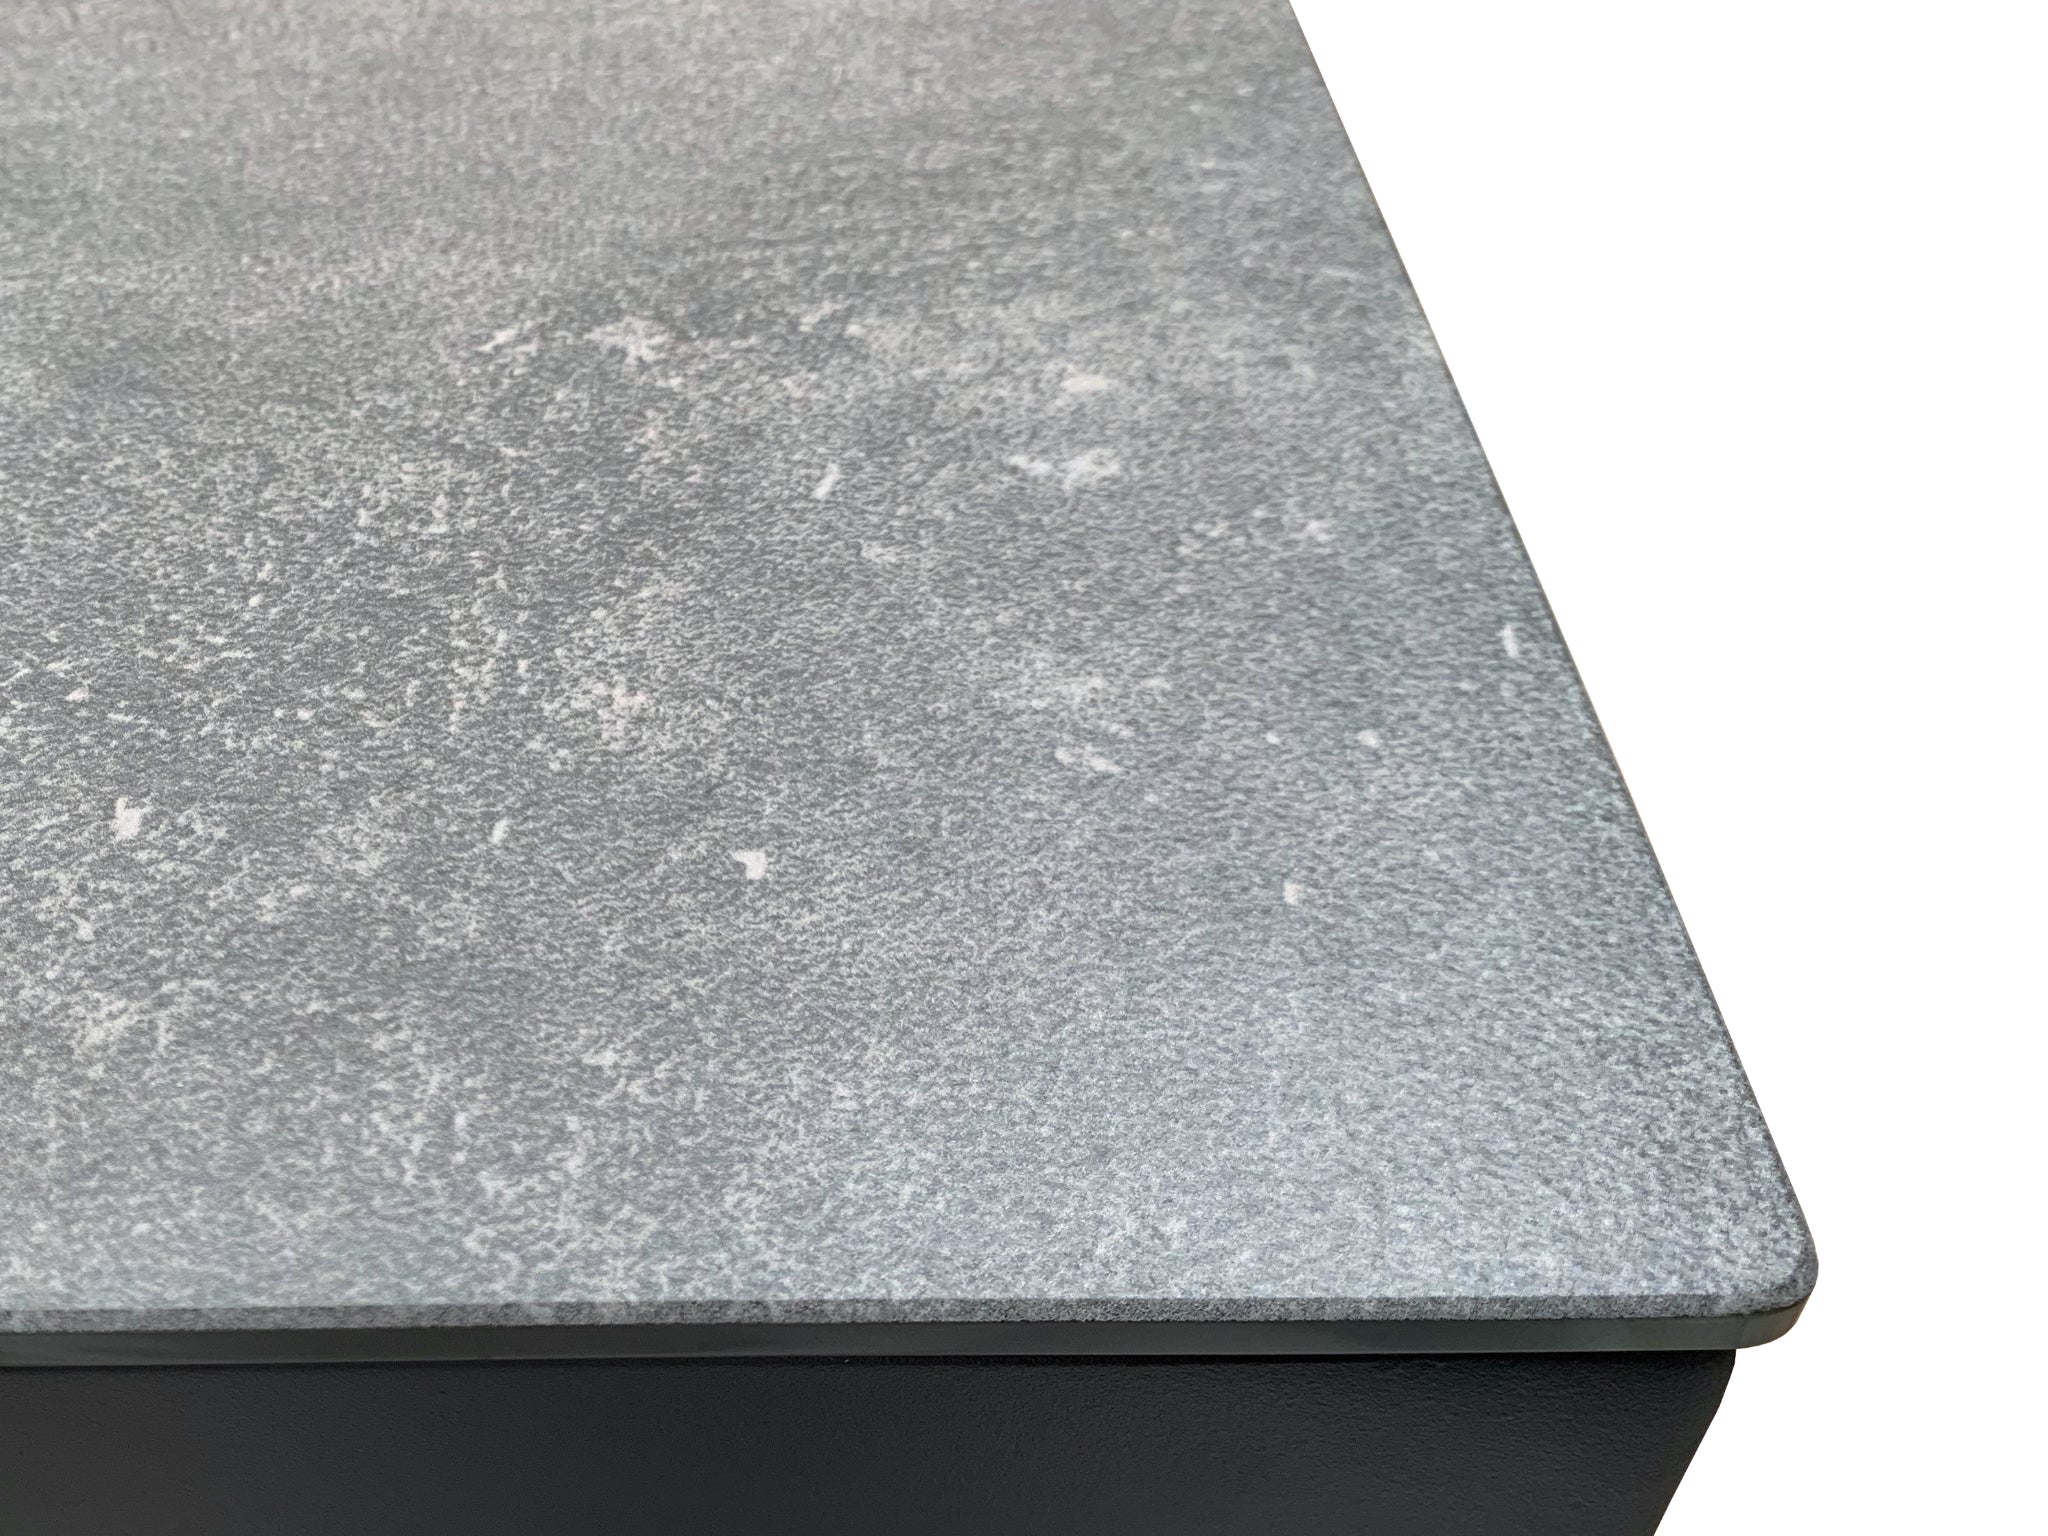 FurnitureOkay Manly Aluminium Outdoor Height Adjustable Table — Charcoal